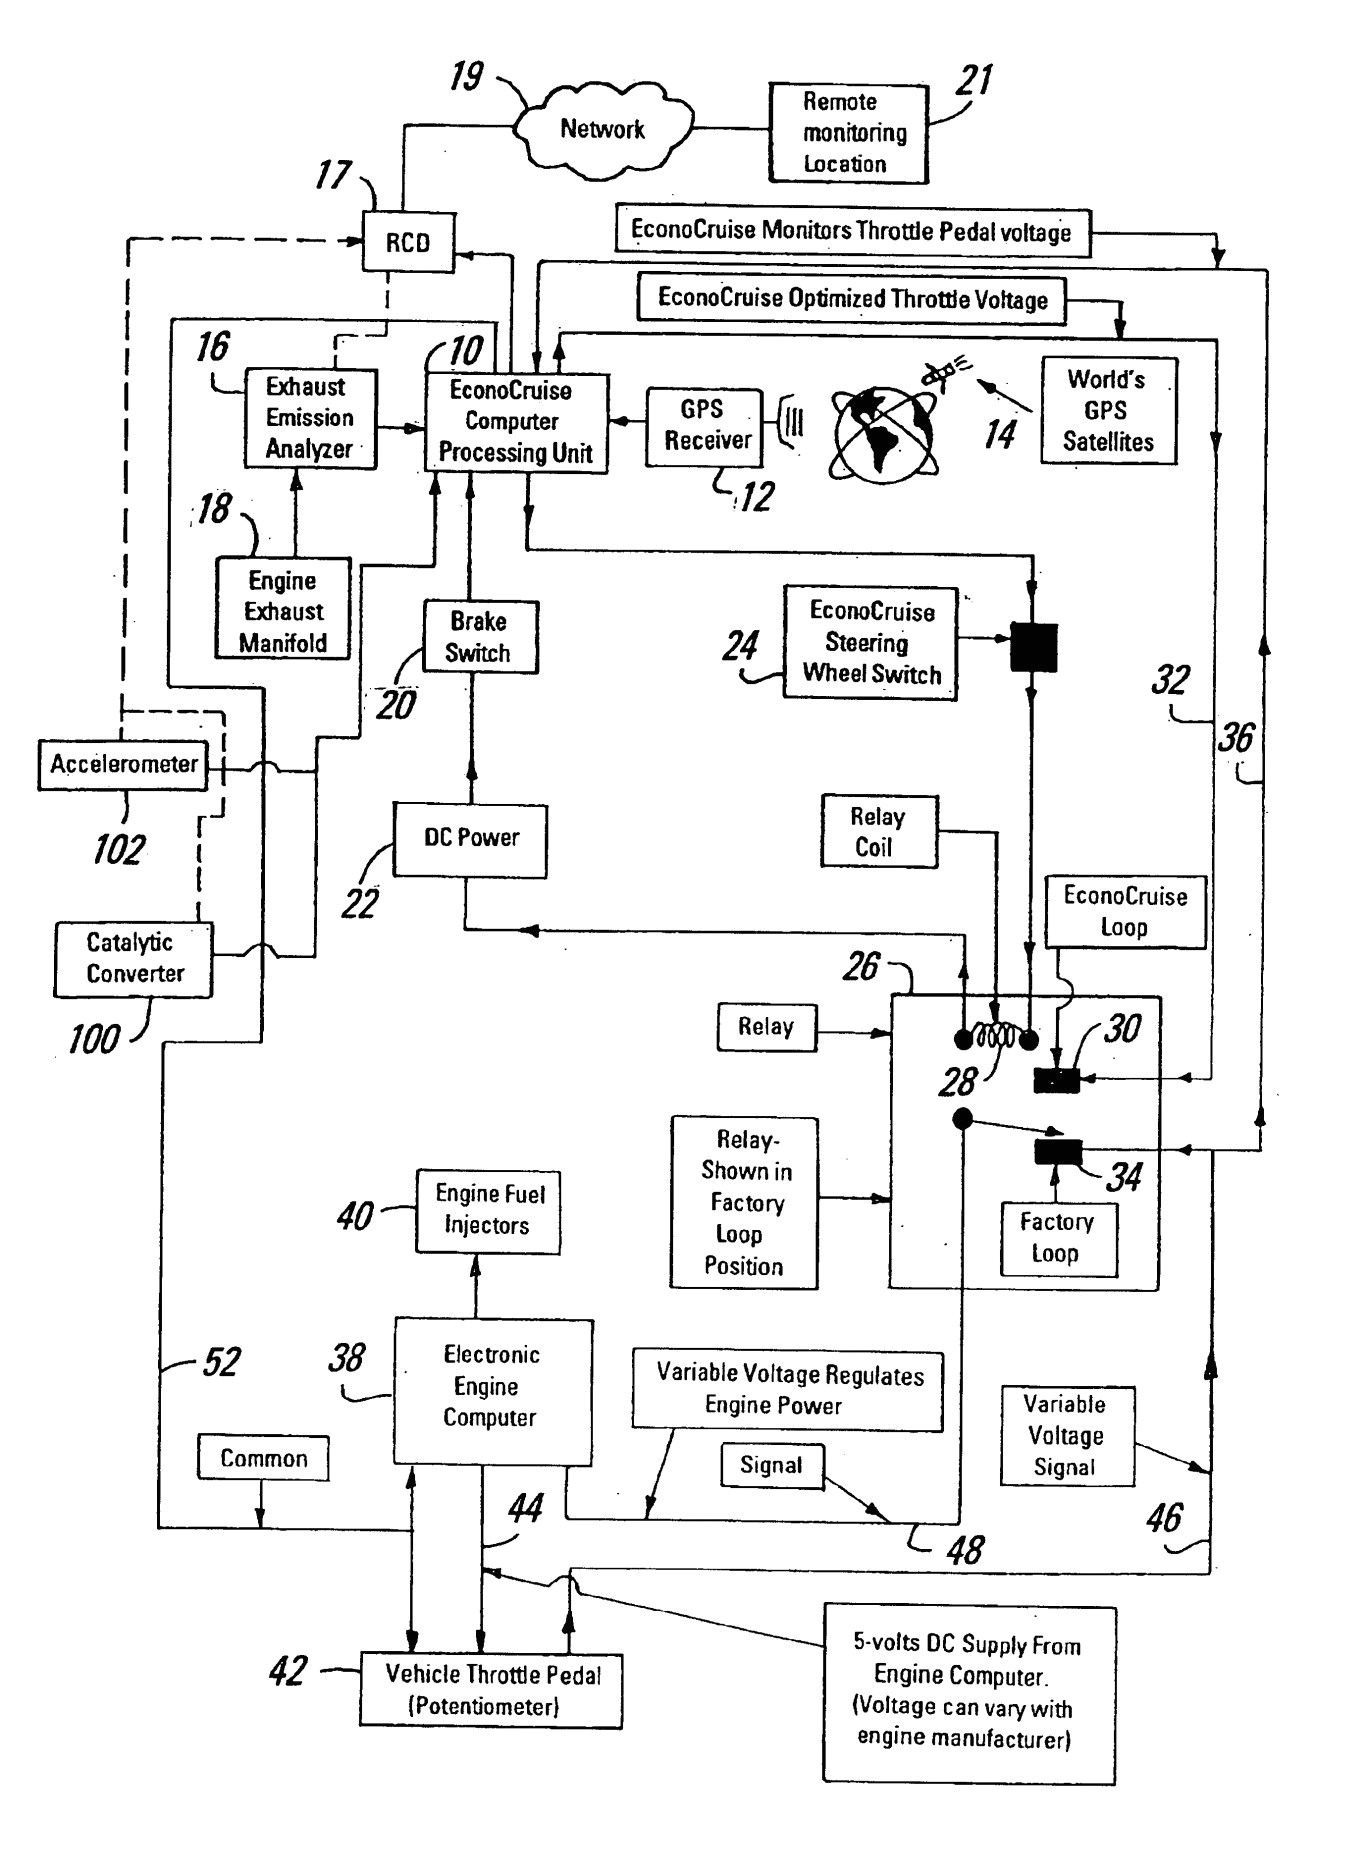 qx wiring diagram use wiring diagram limitorque qx 3 wiring diagram qx wiring diagram